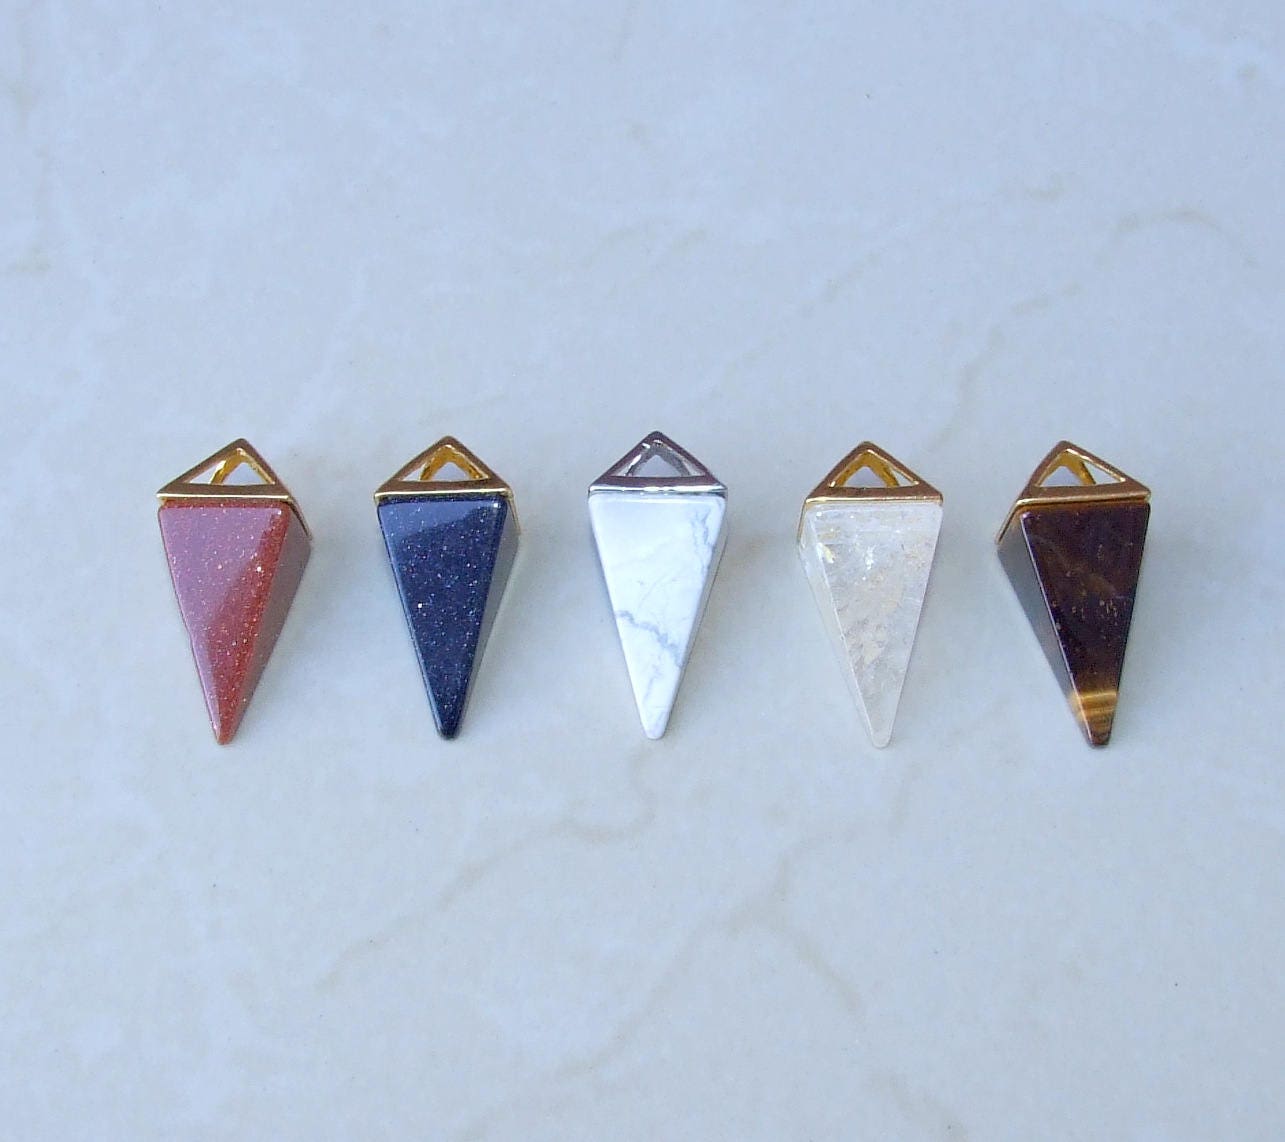 Howlite Pendant - Pyramid Pendant - Triangle Pendant - Howlite Point - Gemstone Pendant - BOHO - Healing - Gift - Gold Plated - 15mm x 34mm